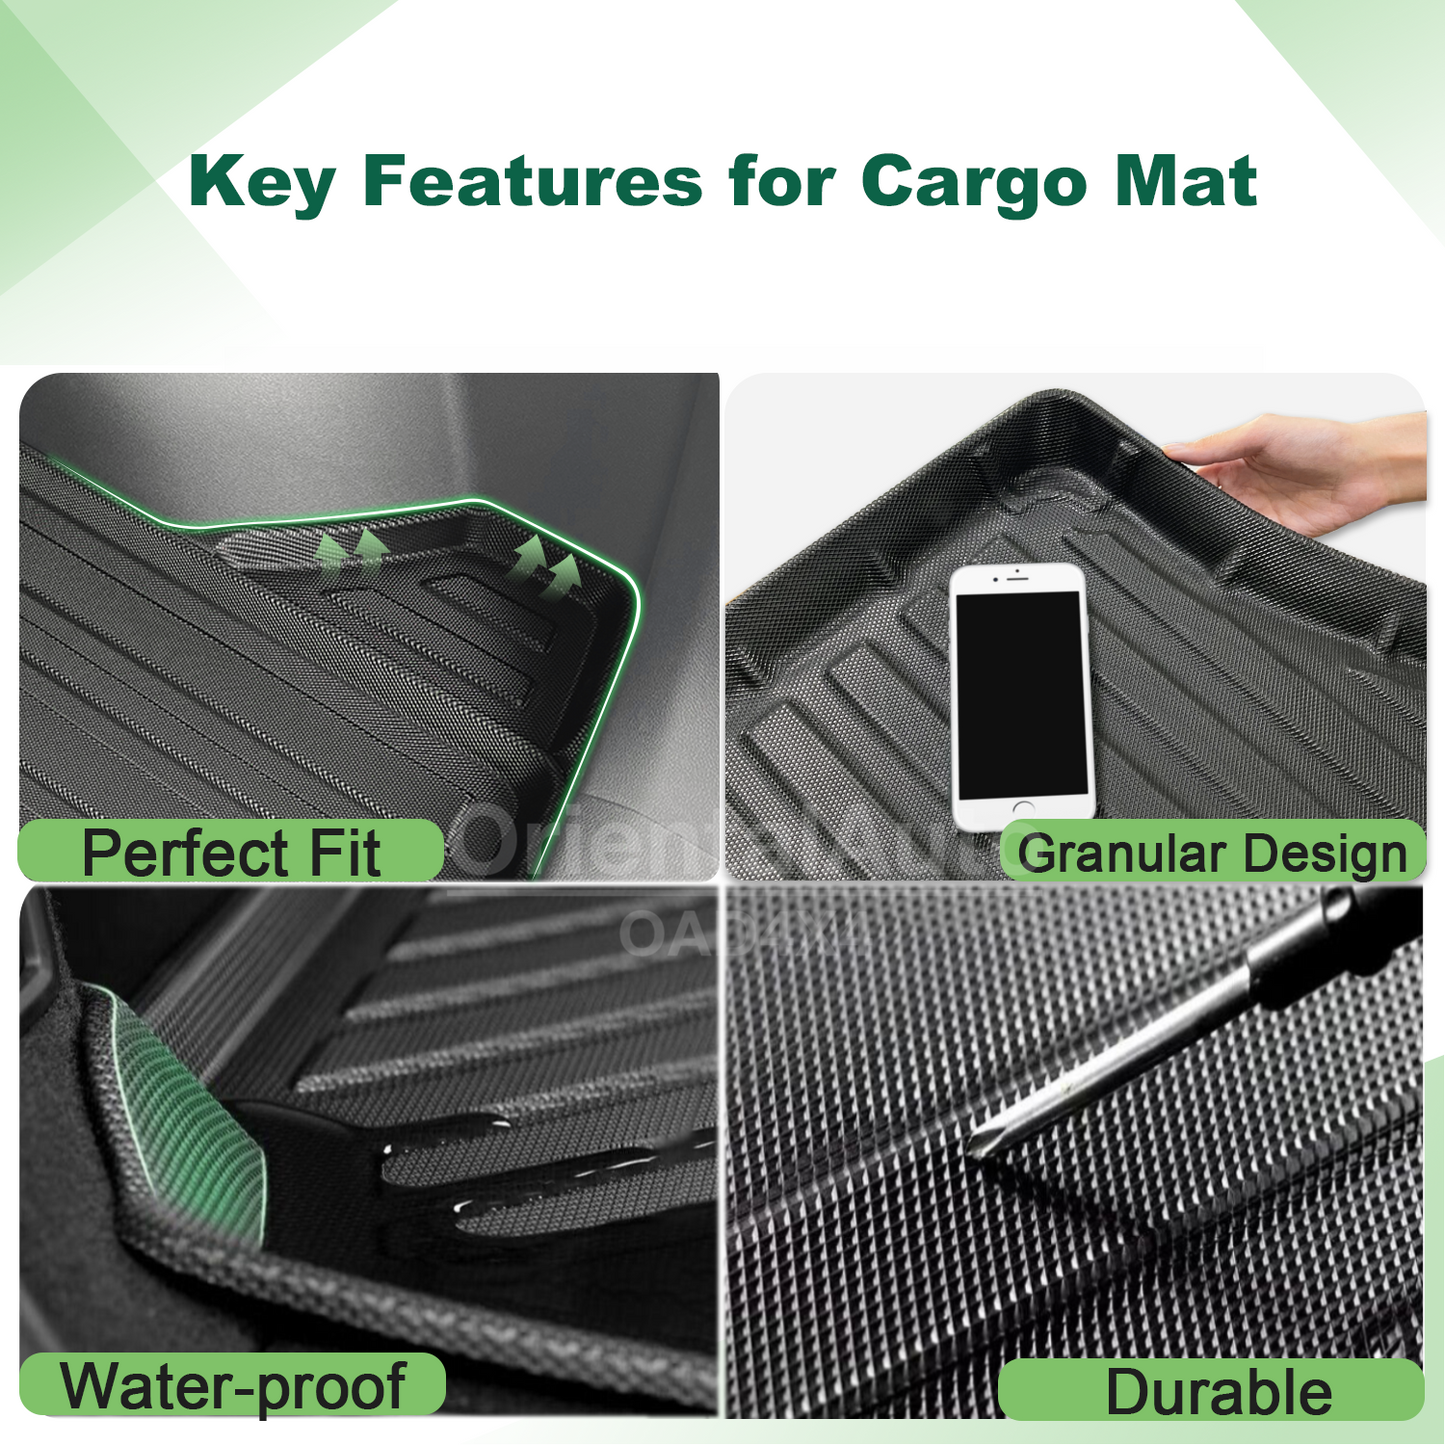 Luxury Weather Shields & 3D TPE Cargo Mat for Mazda CX3 CX-3 2015-Onwards Weather Shields Window Visor Boot Mat